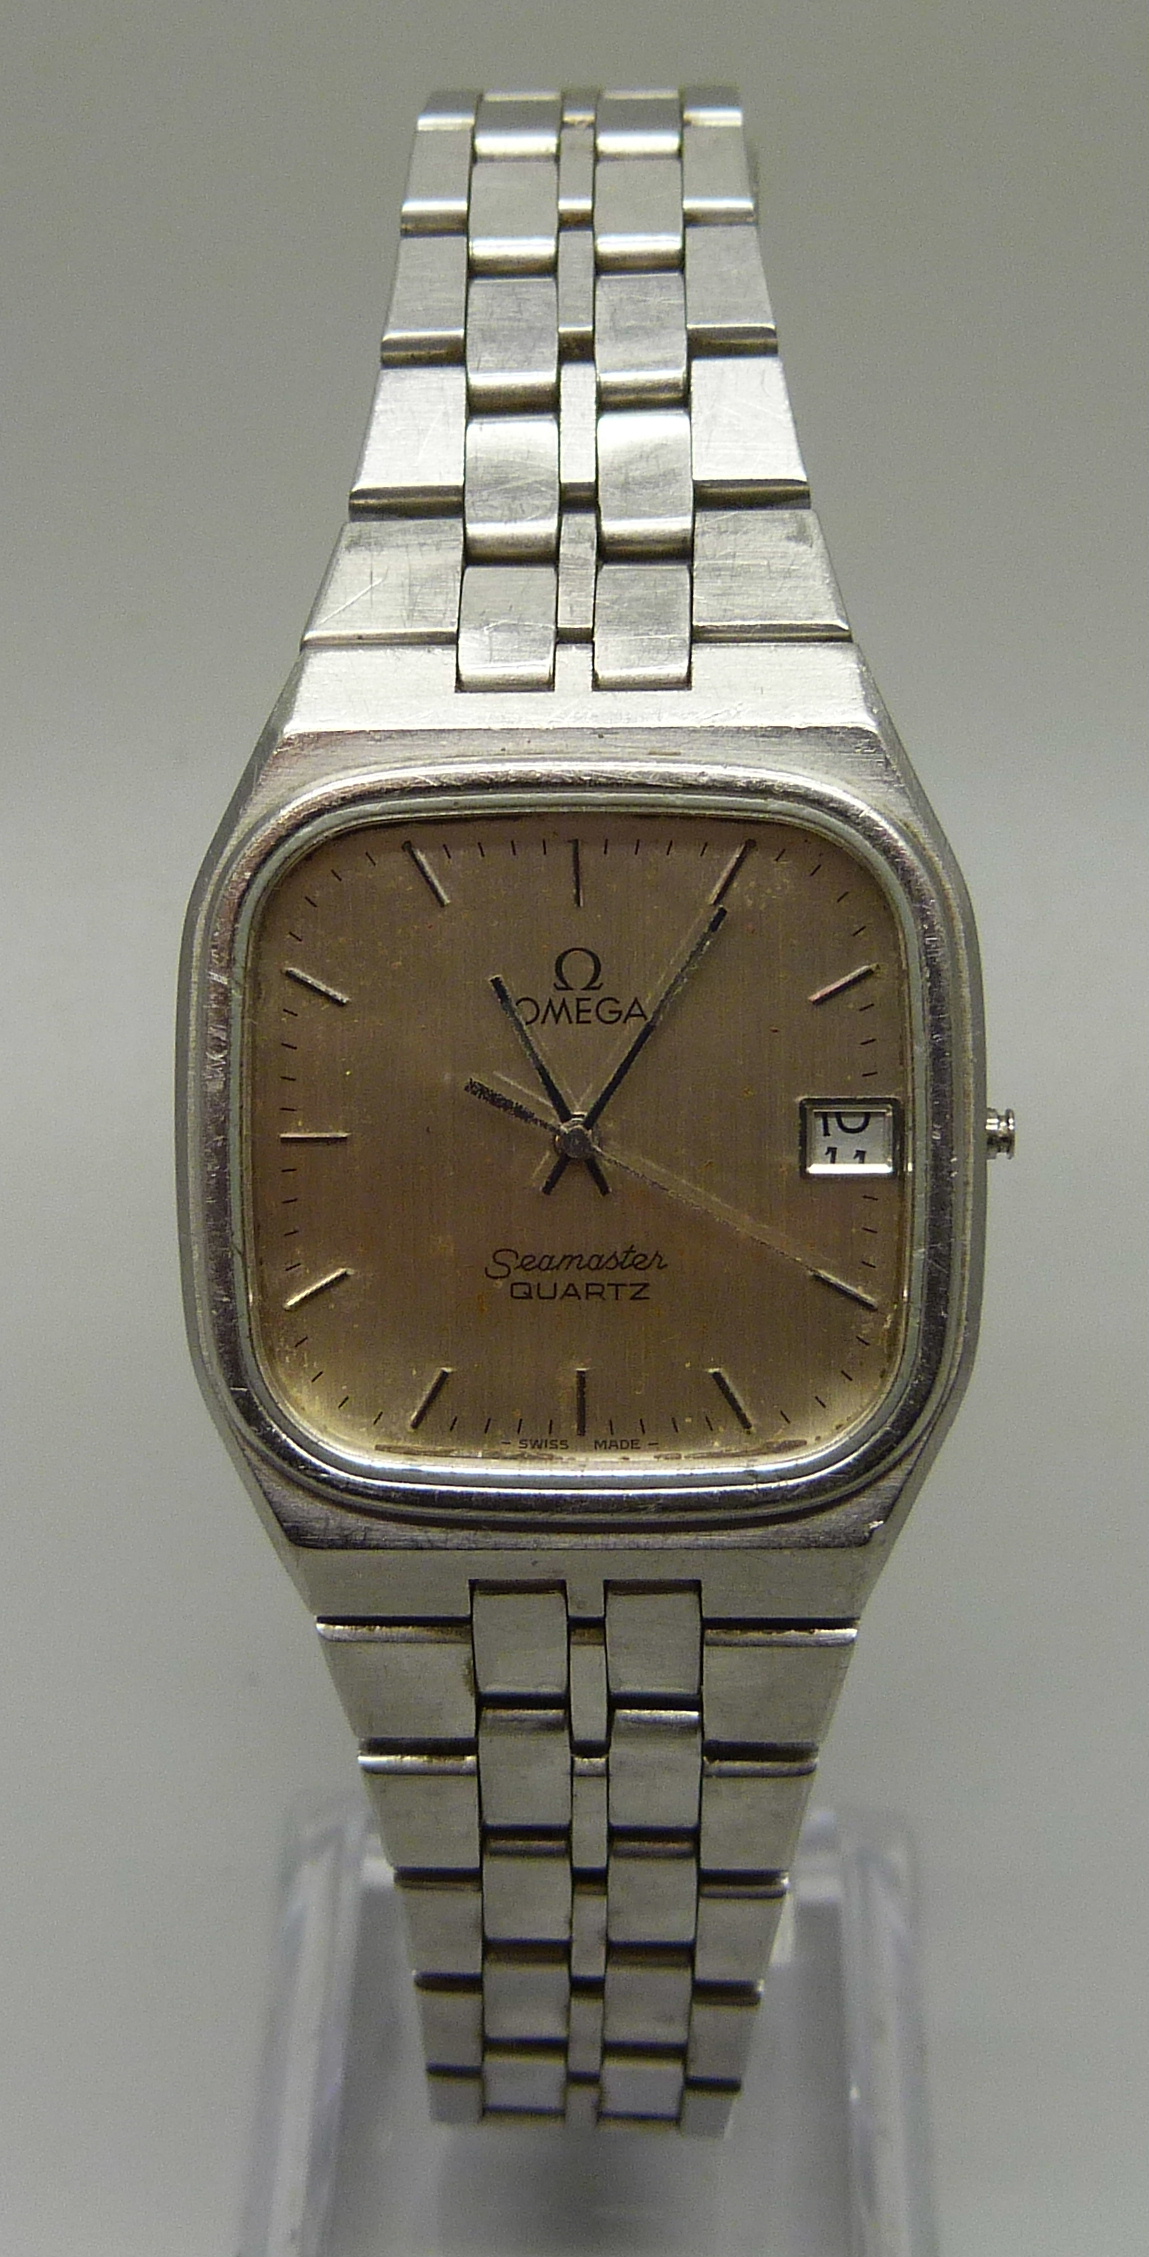 An Omega Seamaster quartz date wristwatch